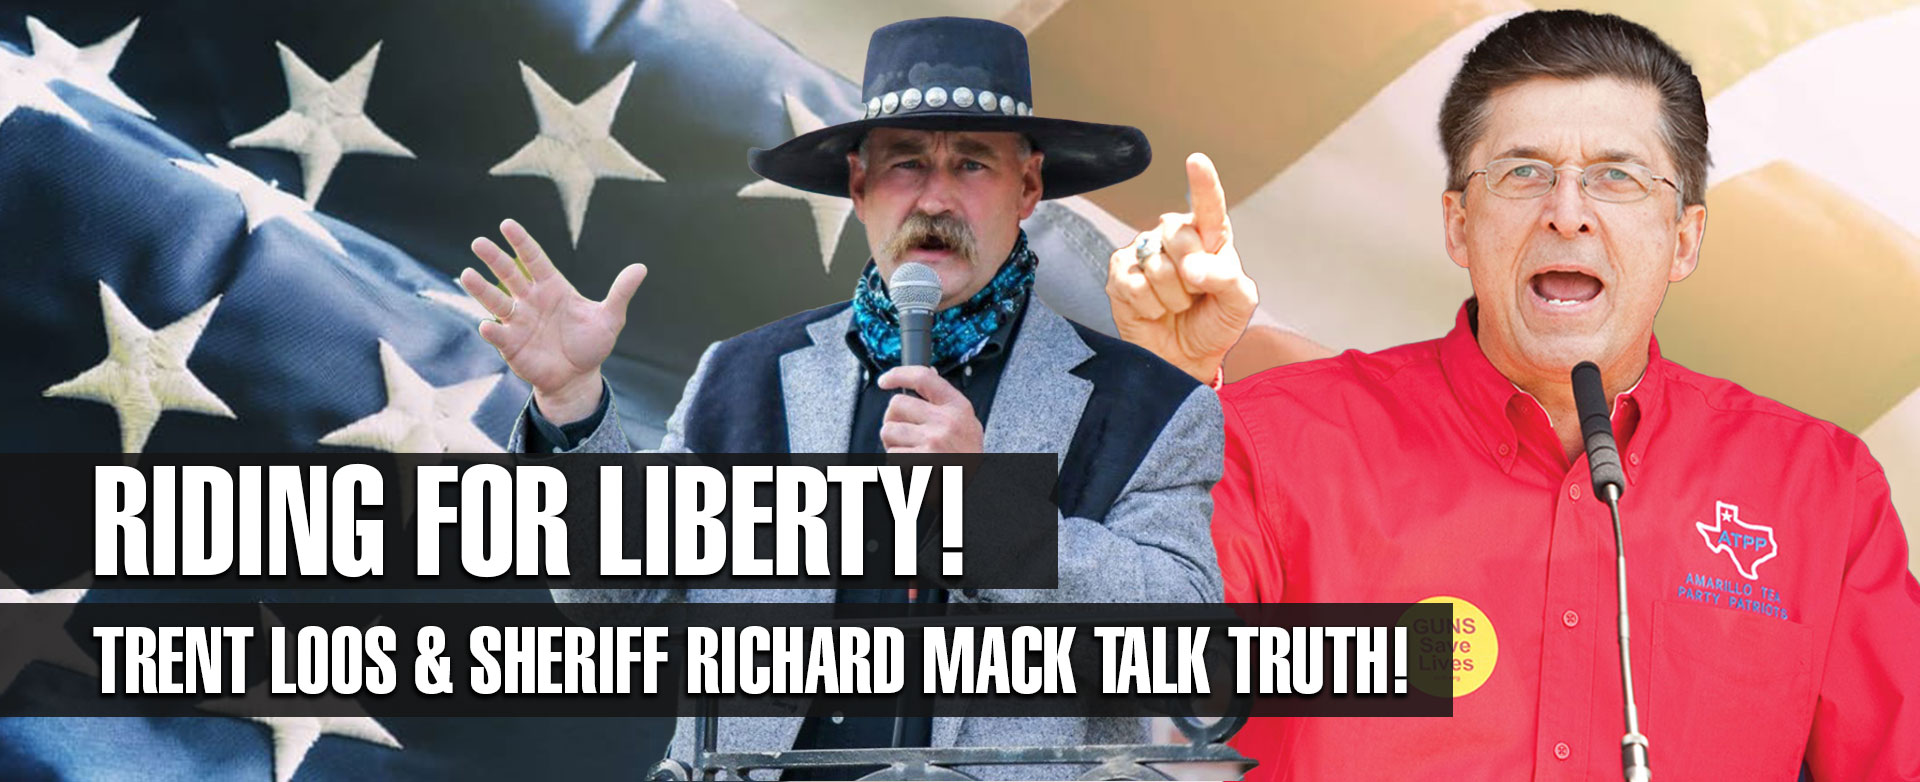 MyPatriotsNetwork-RIDING FOR LIBERTY! Trent Loos & Sheriff Richard Mack Talk Truth!